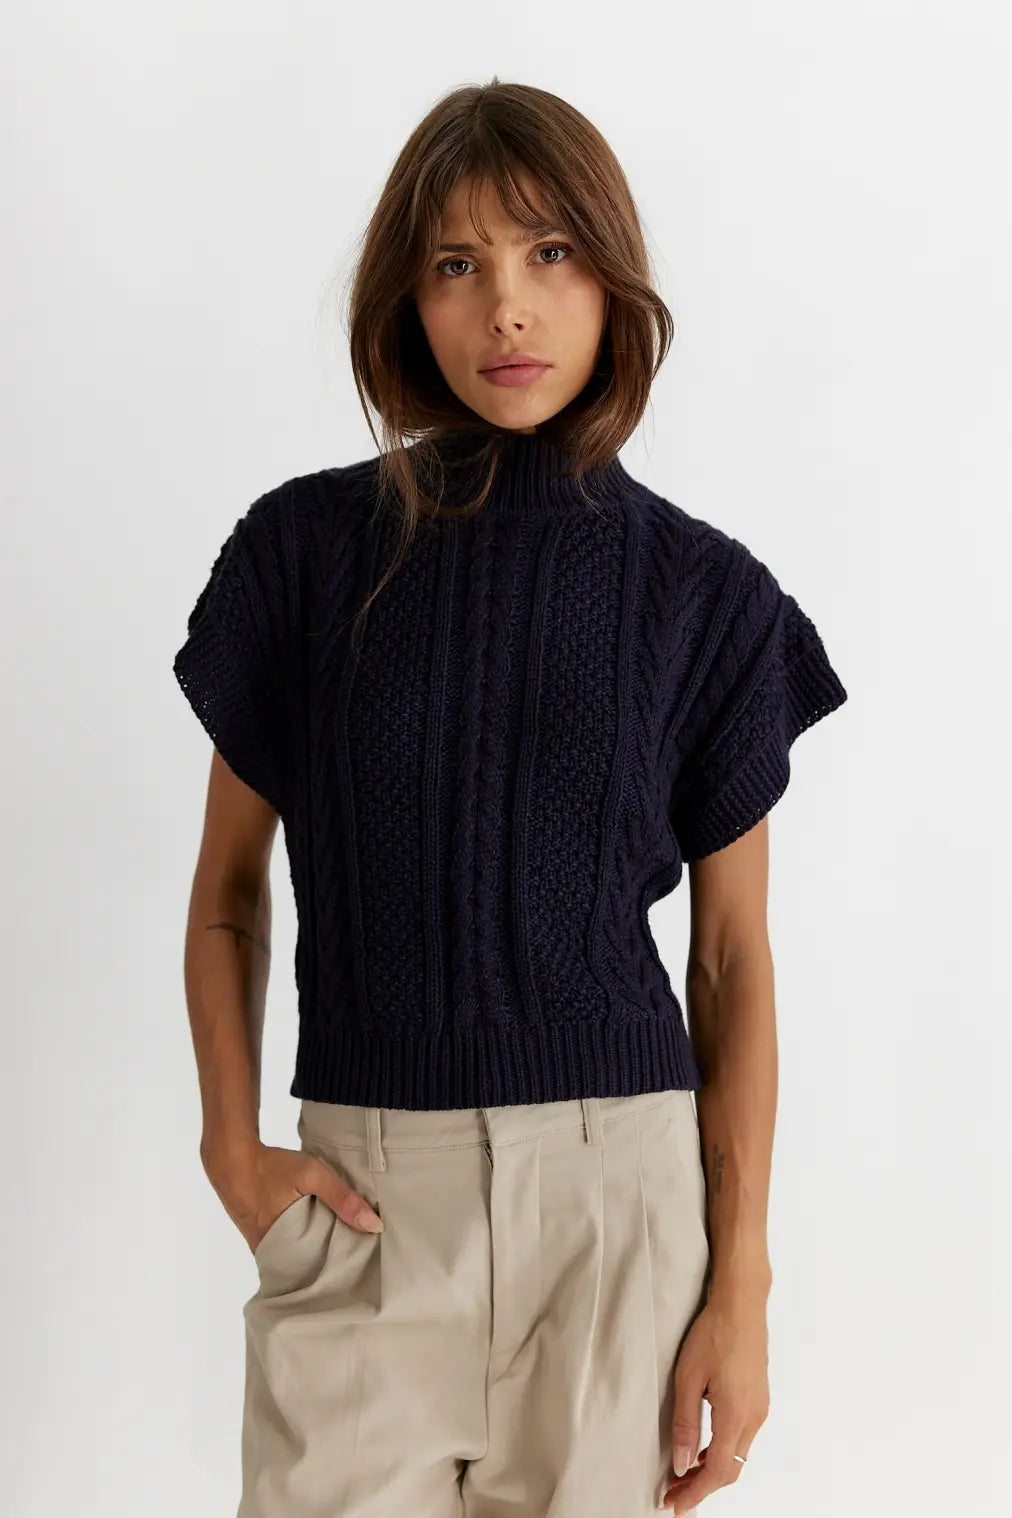 The Eira Sweater